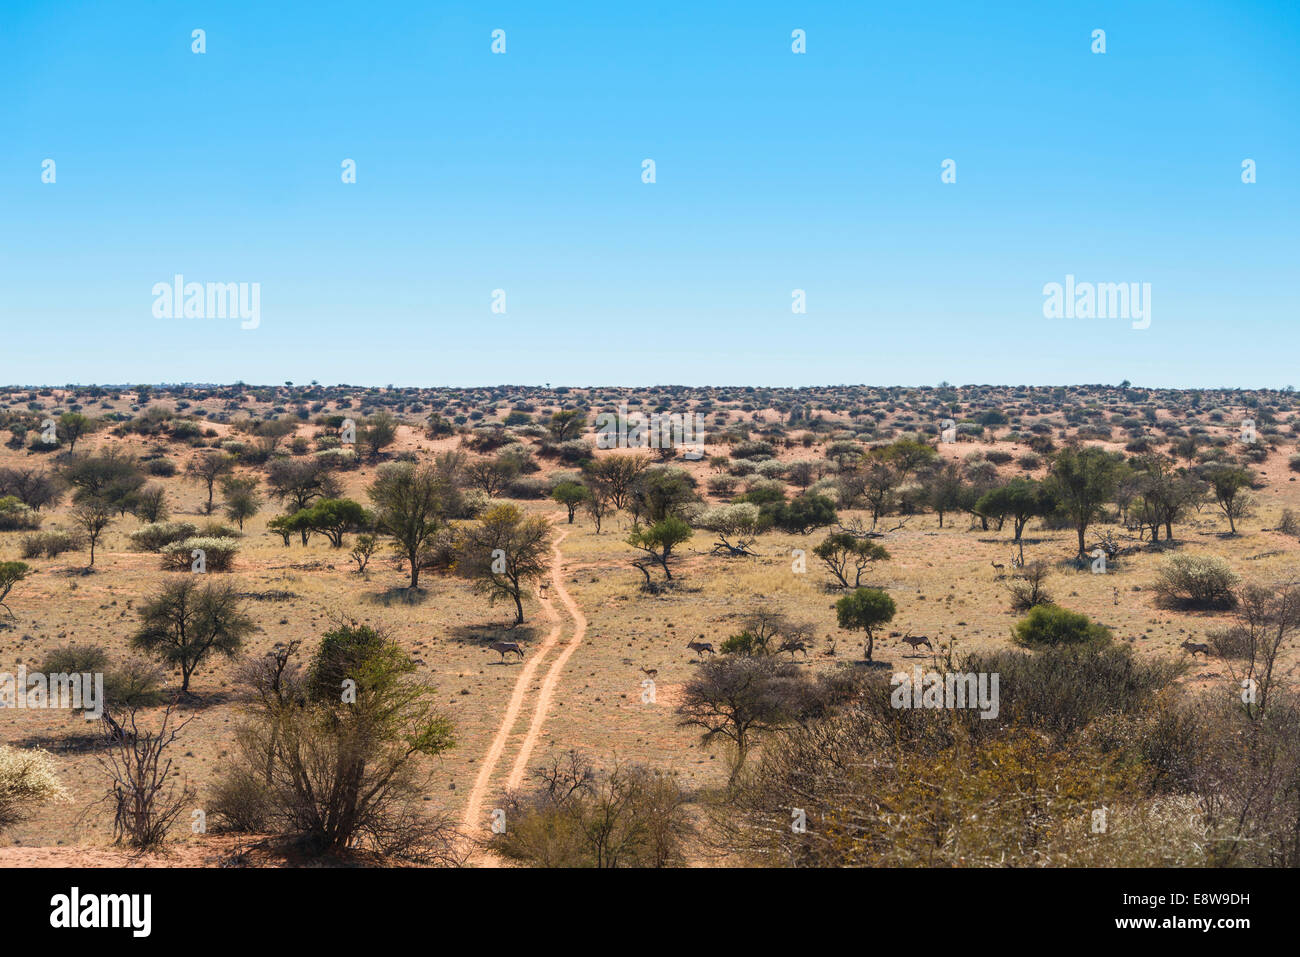 Wide landscape with trees, Kalahari, Namibia Stock Photo